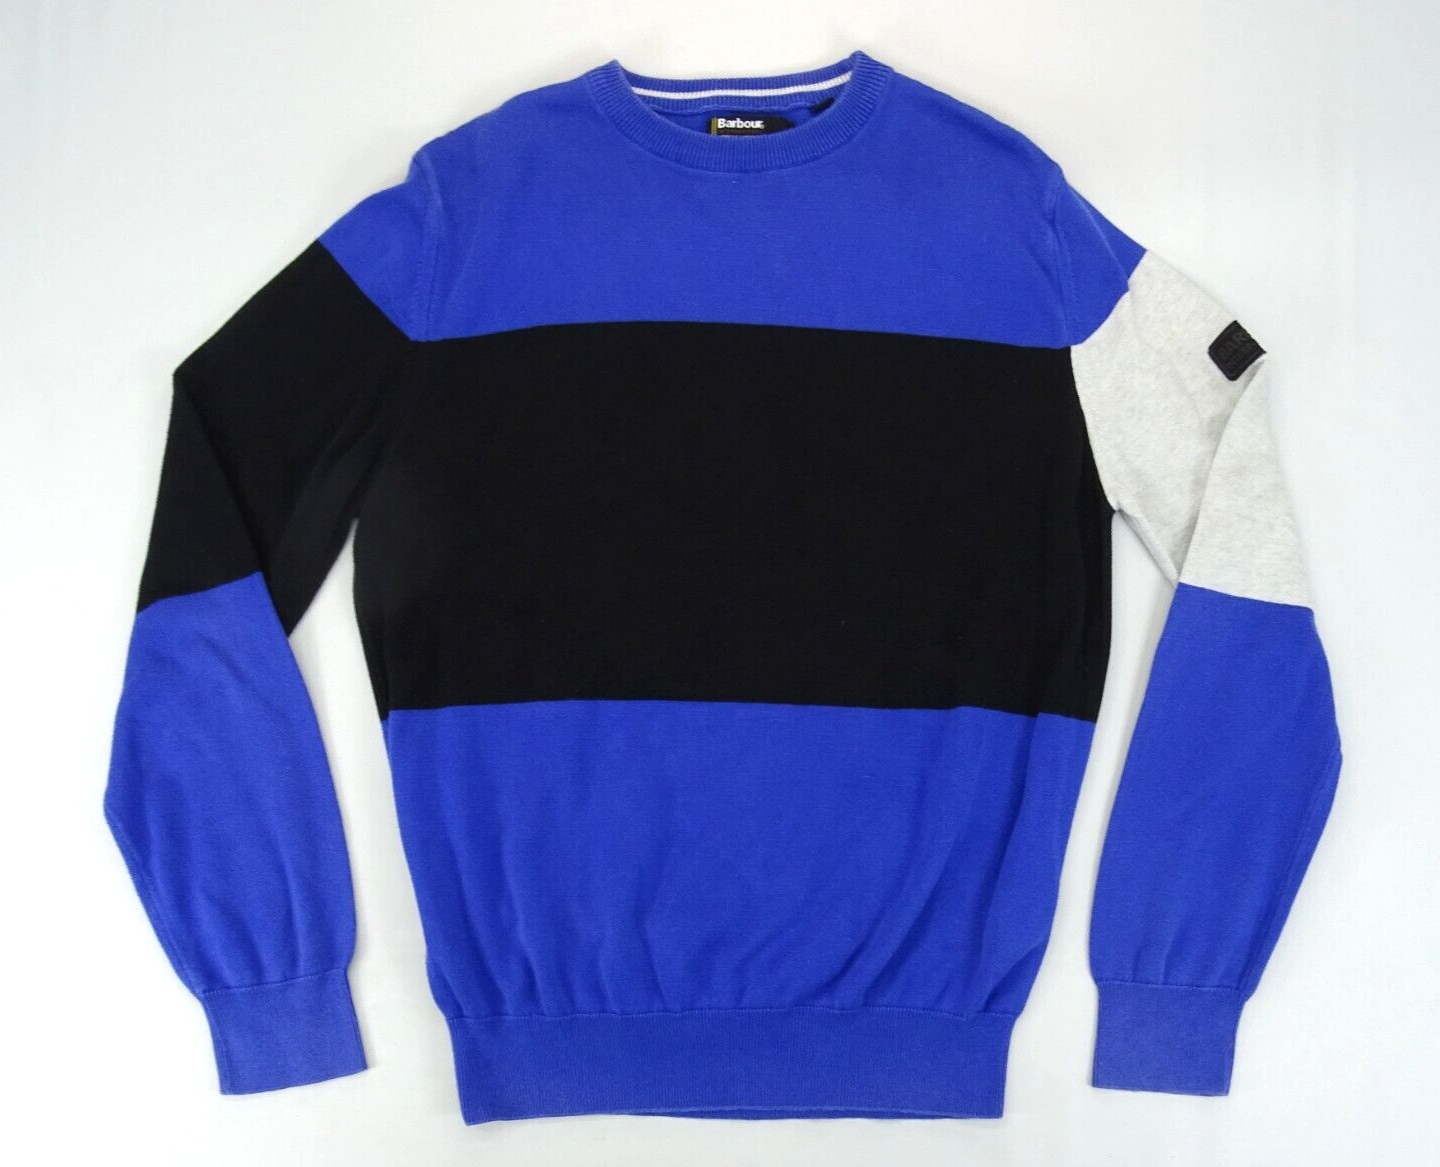 Primary image for Barbour Men's Sweater Size L Blue Striped Crew Neck 100% Cotton Color Block